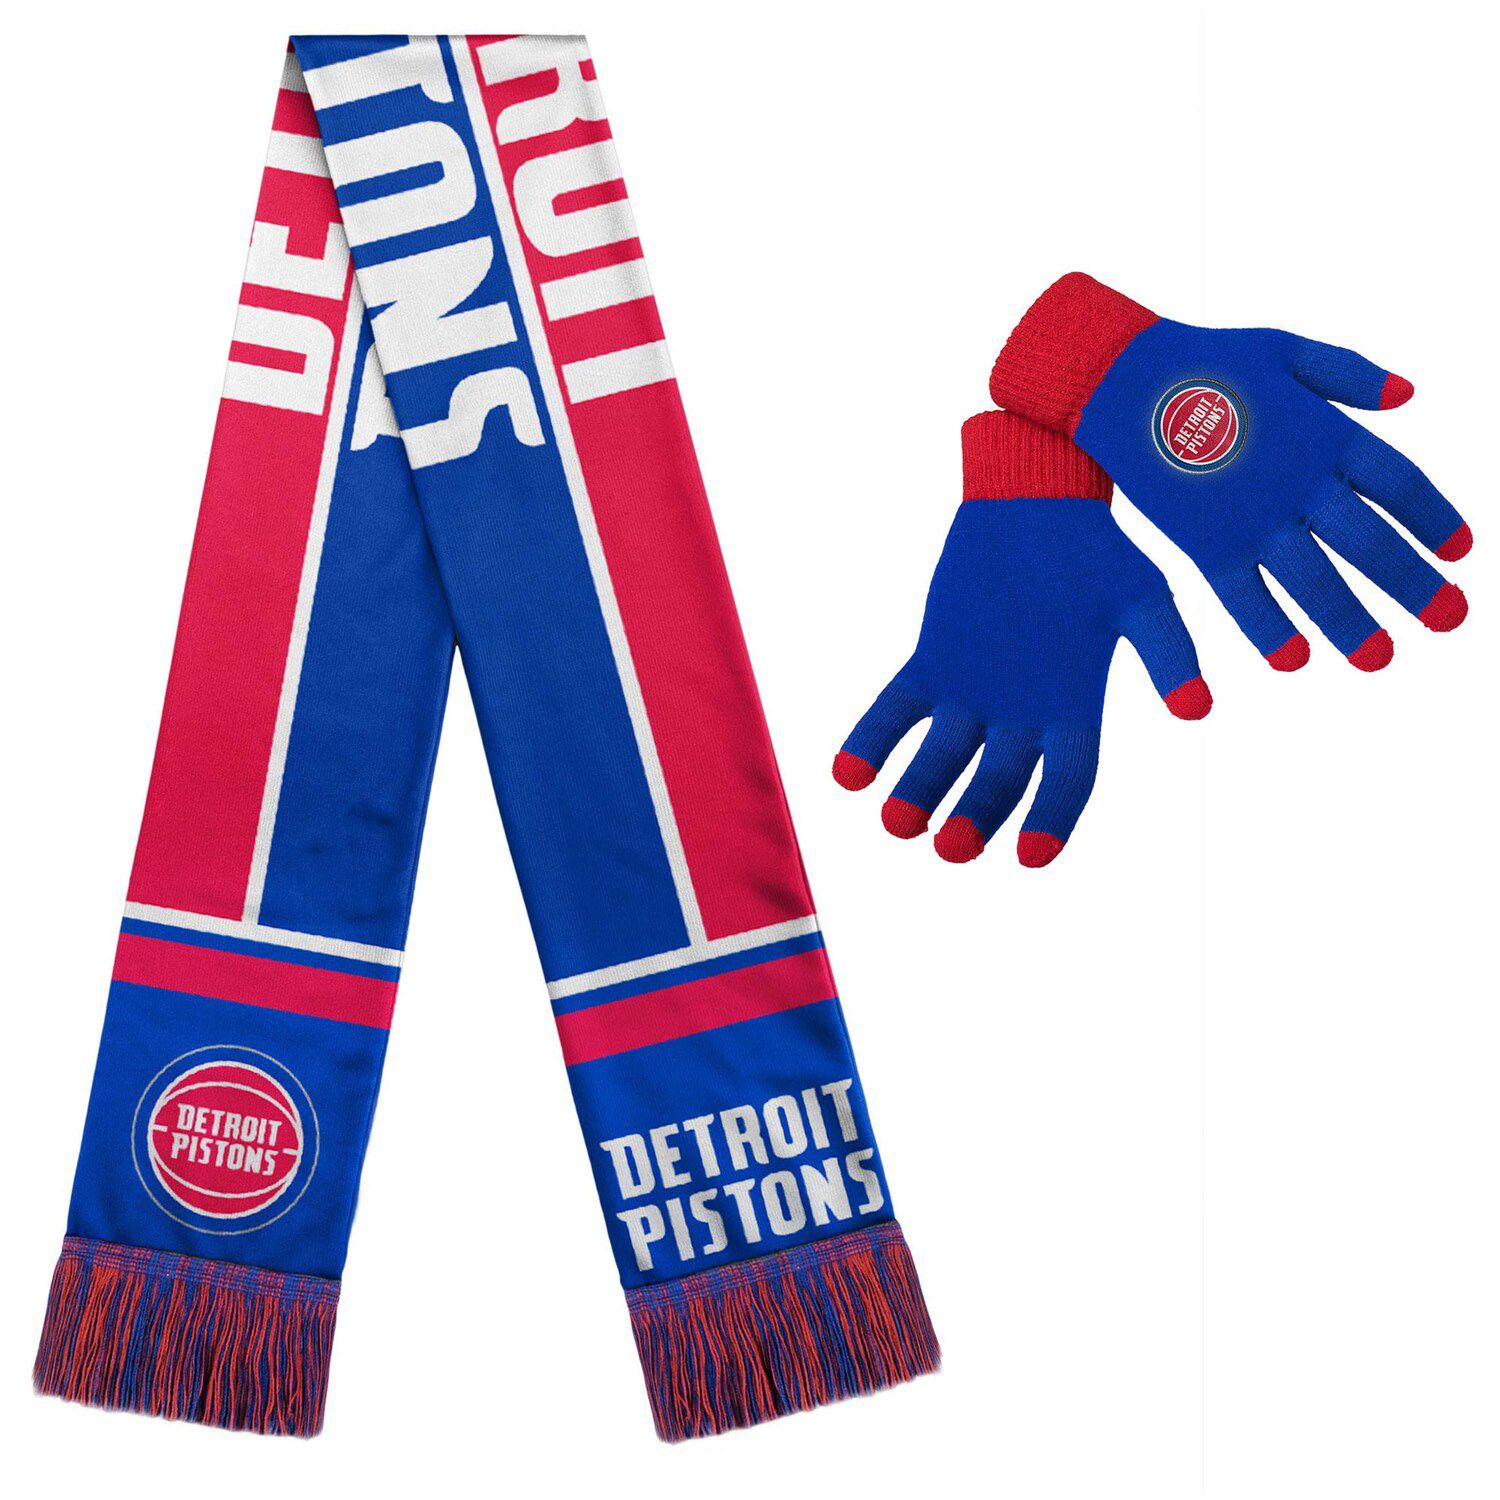 Image for Unbranded Detroit Pistons Gloves & Scarf Set at Kohl's.